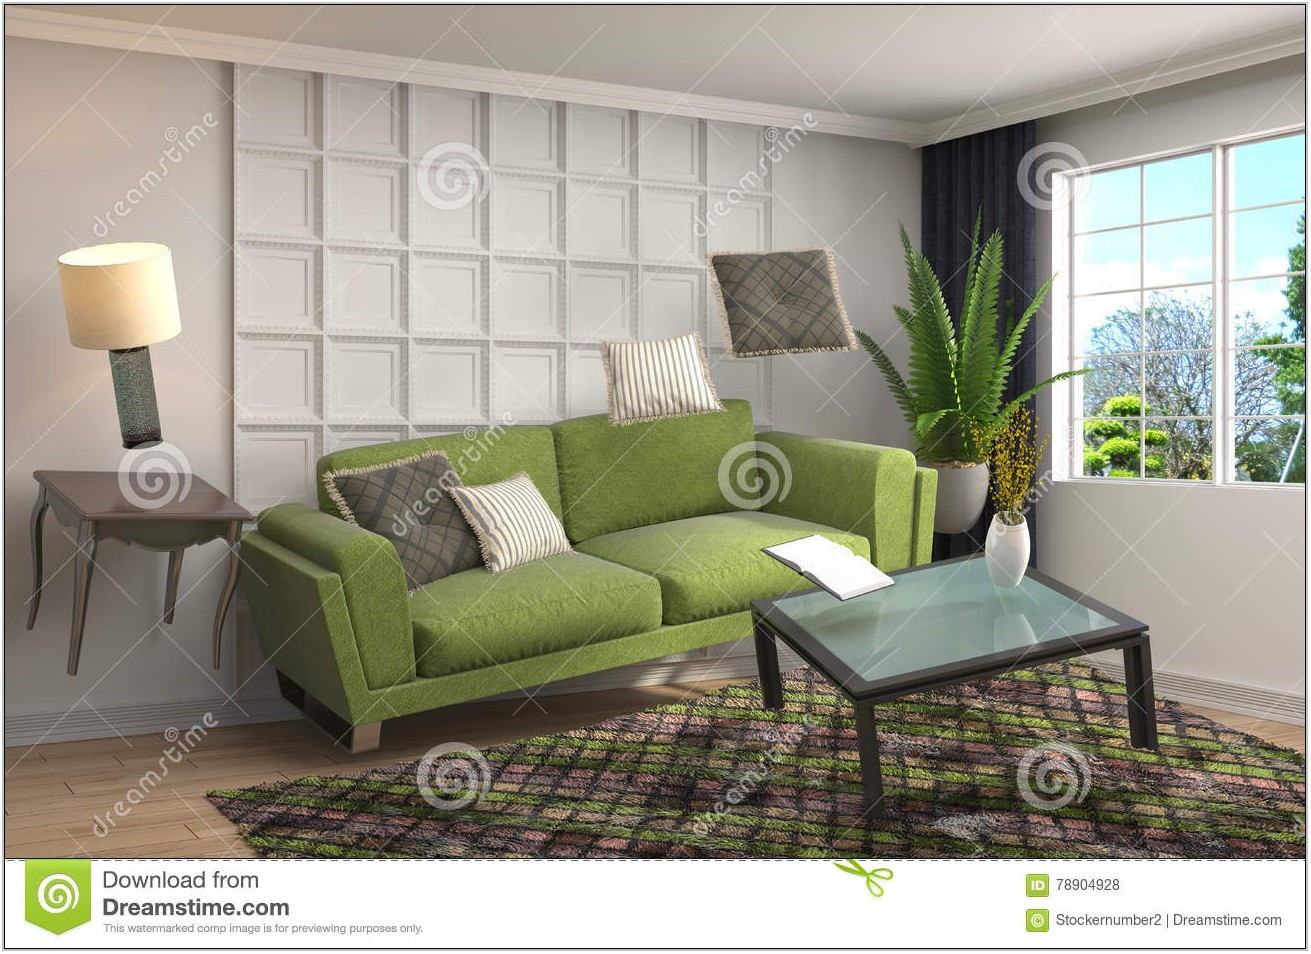 Zero Gravity Living Room Furniture